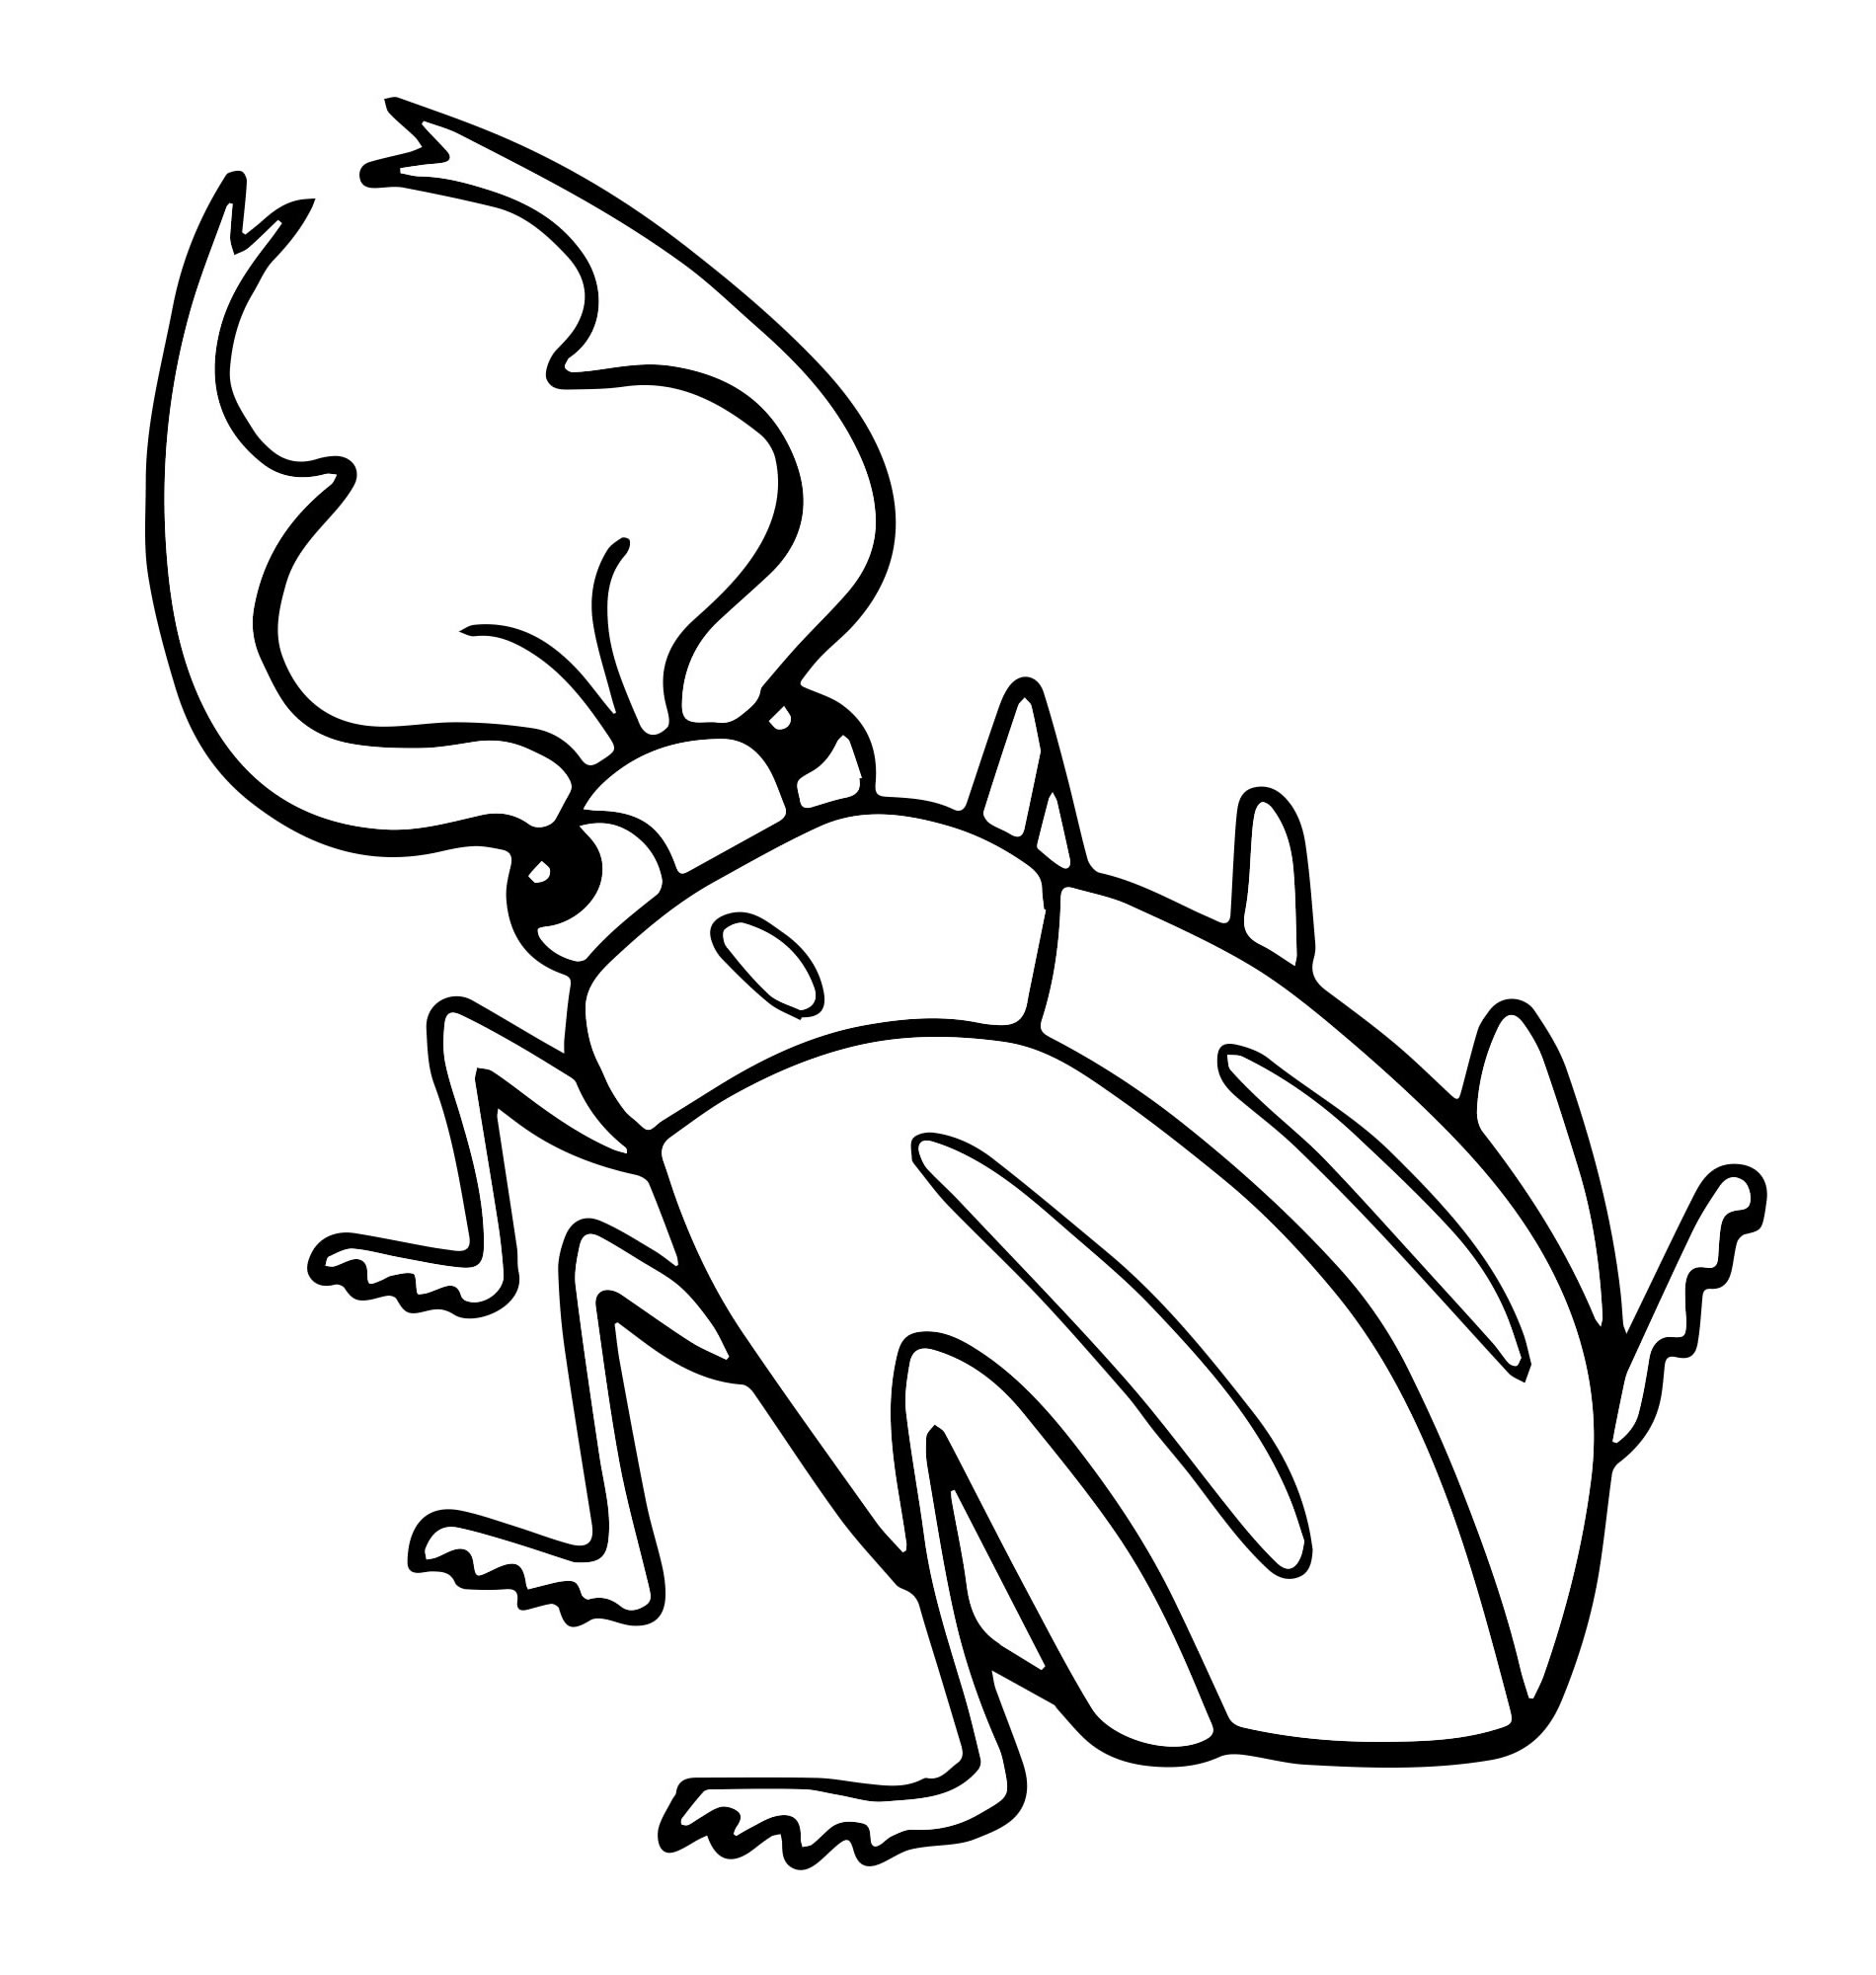 Dandelion beetle #13